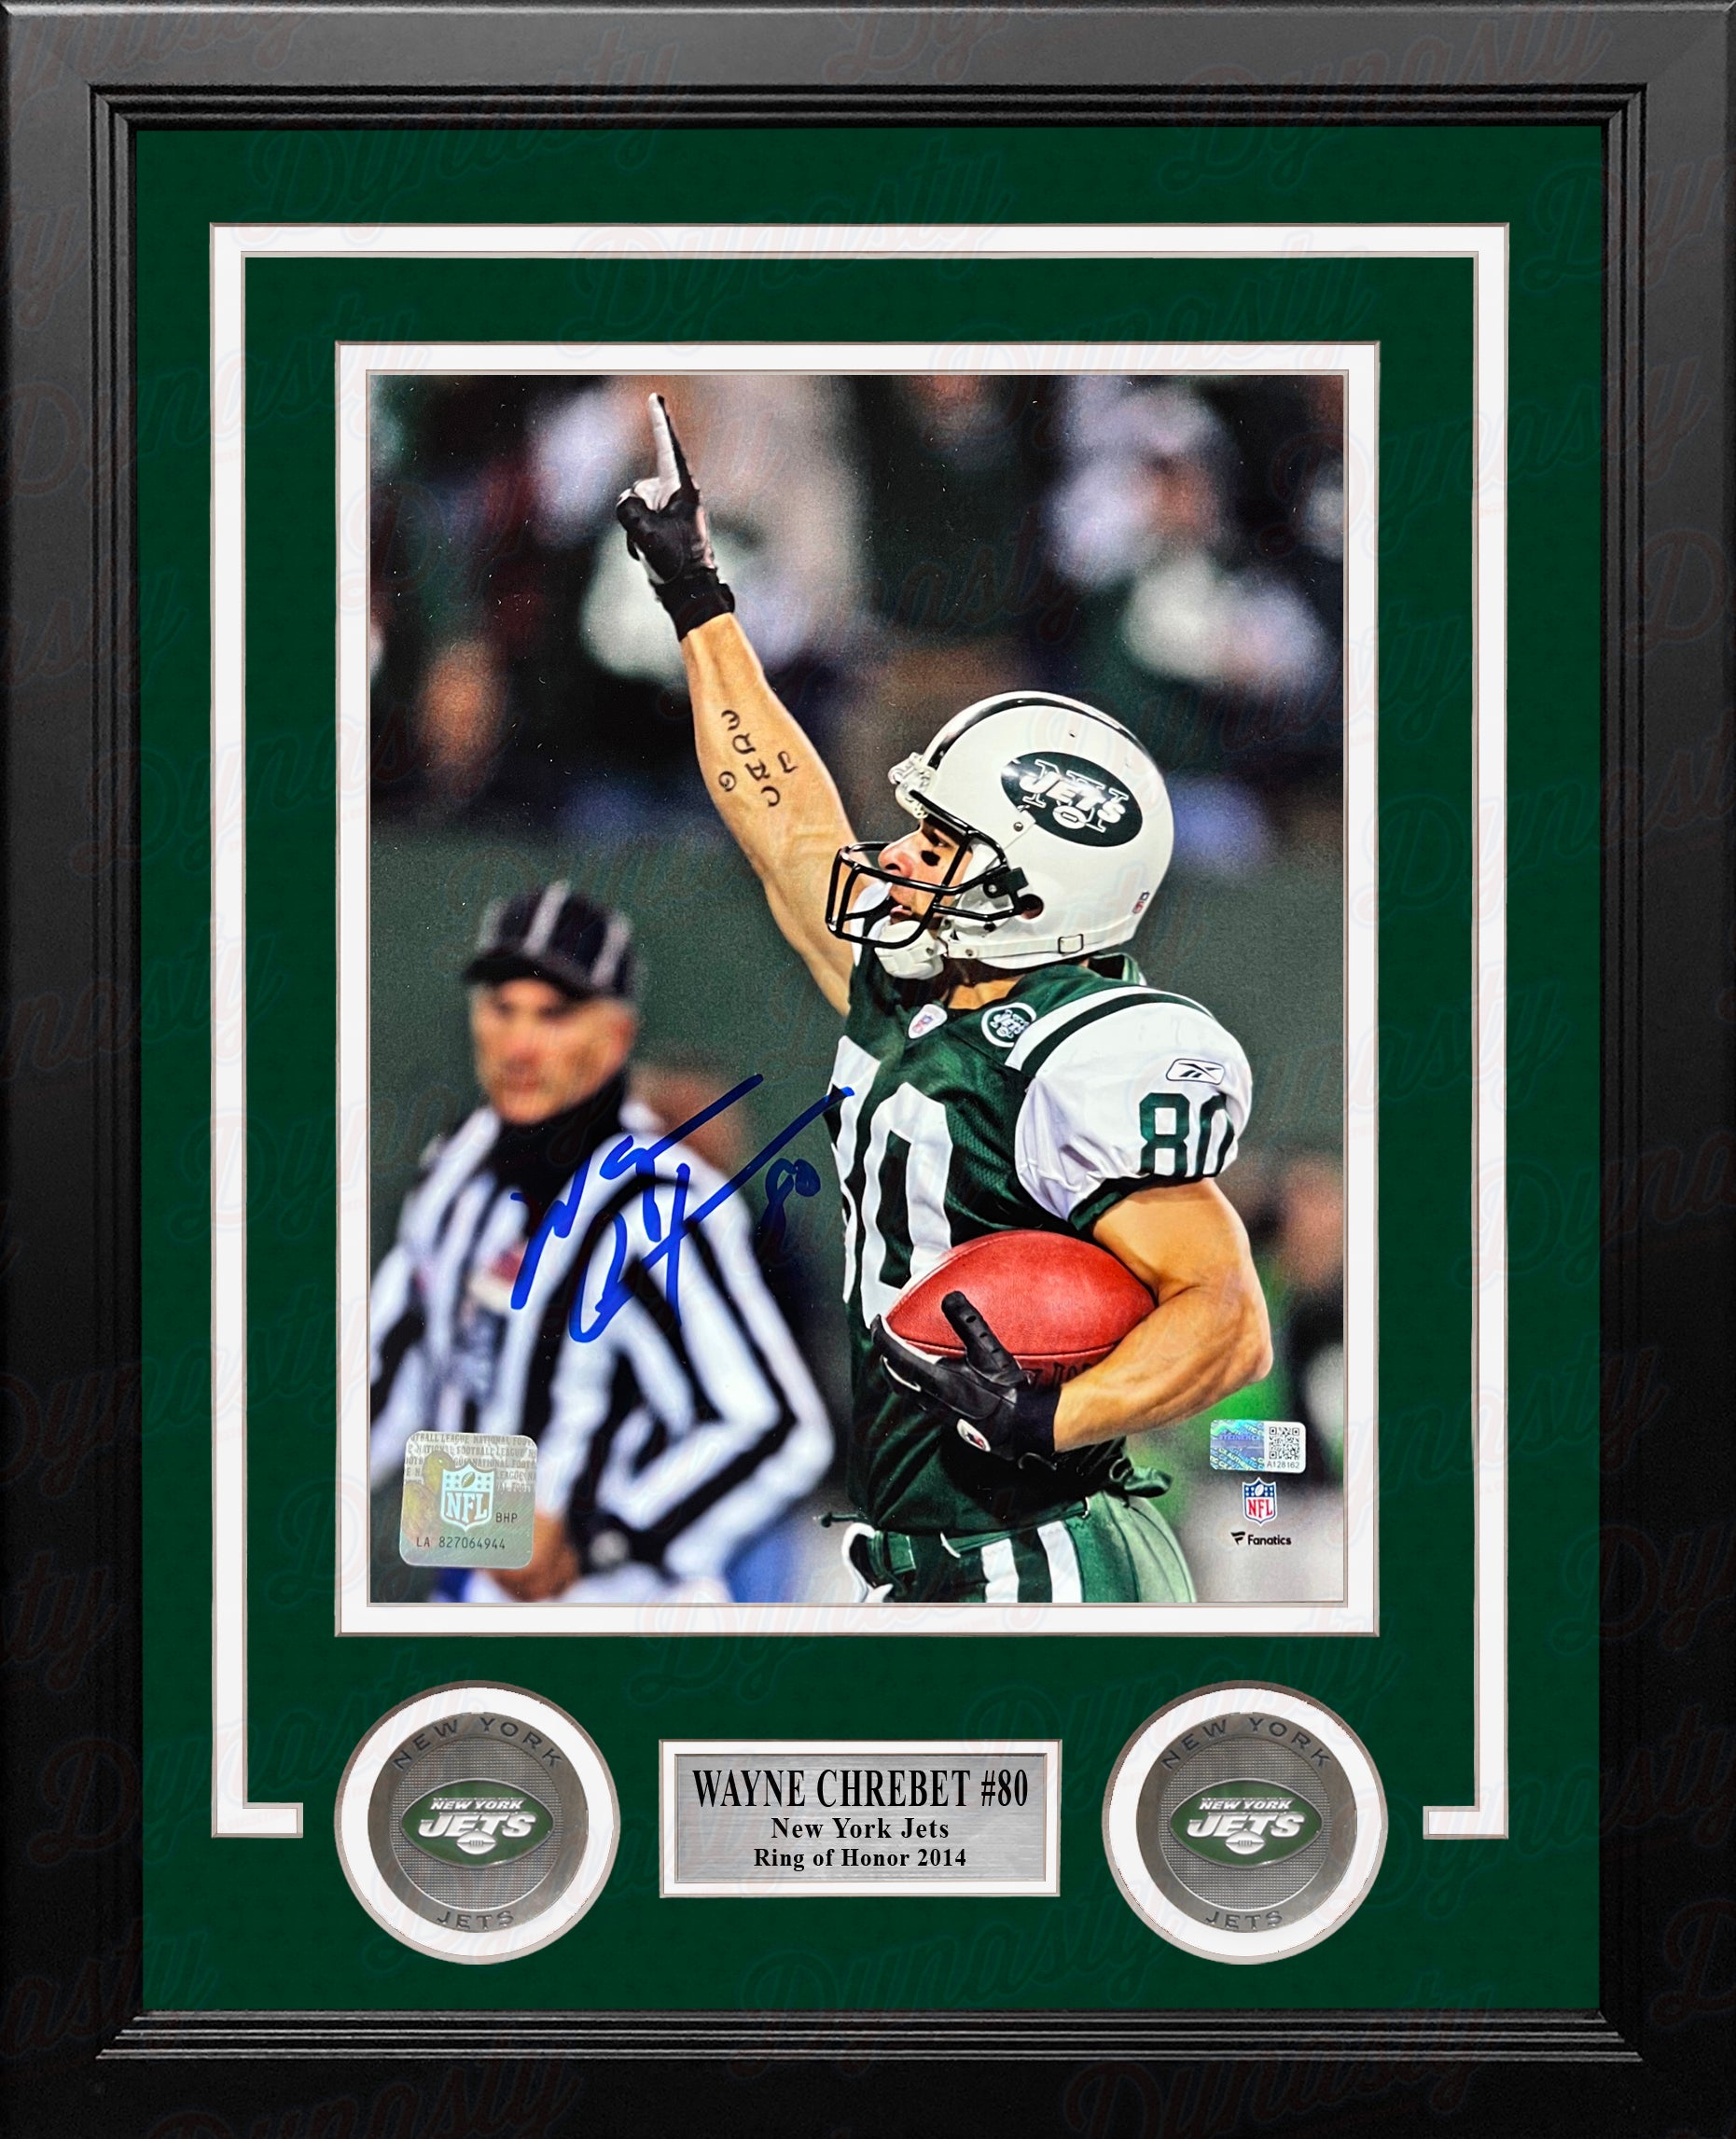 Wayne Chrebet Celebration New York Jets Autographed 8" x 10" Framed Football Photo - Dynasty Sports & Framing 